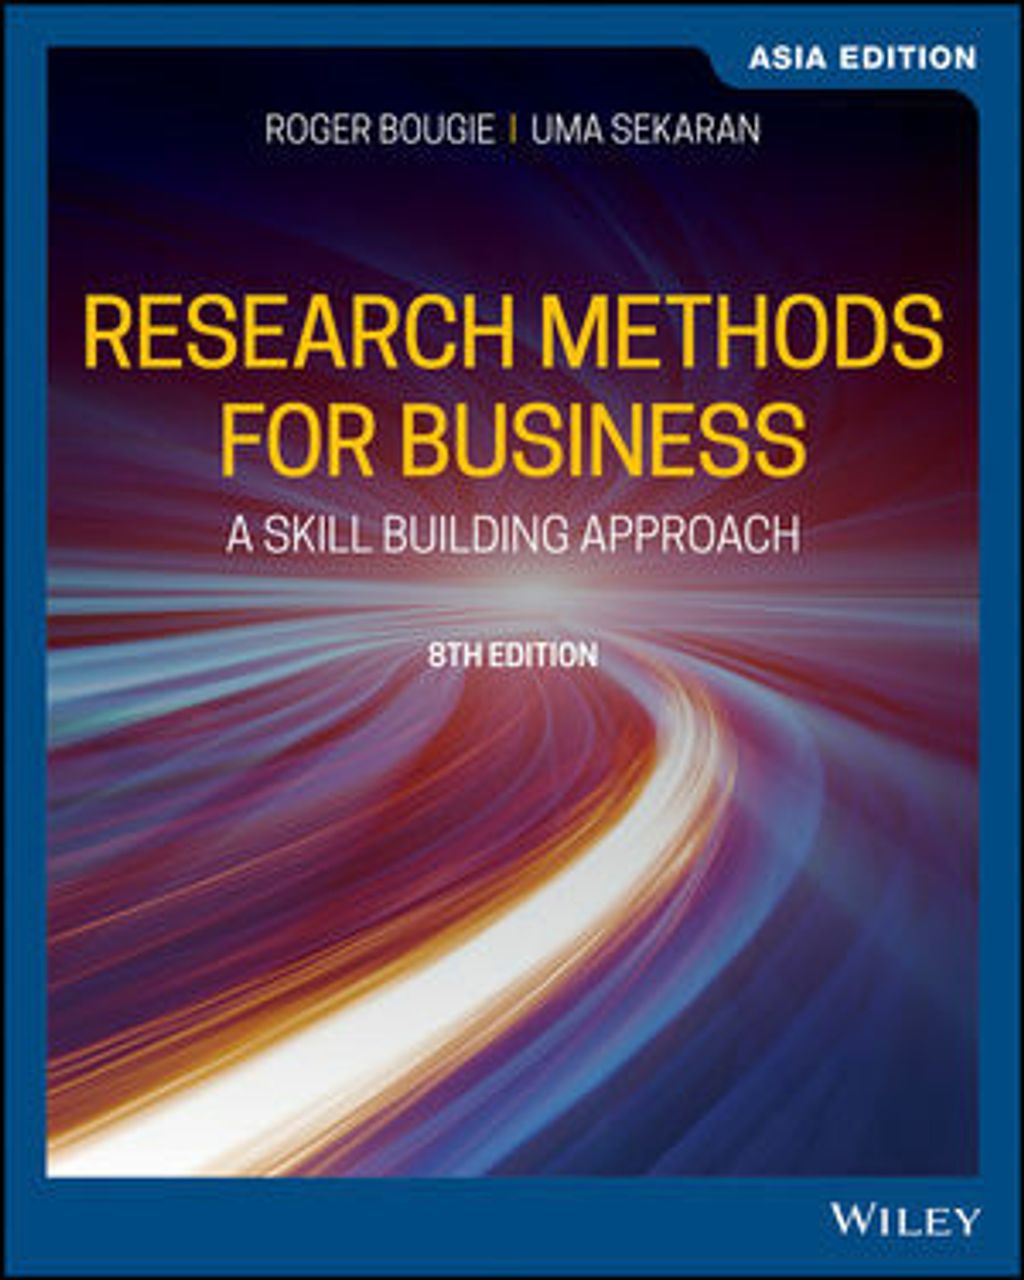 9781119683537 Research Methods For Business Uma Sekaran 11E.jpg